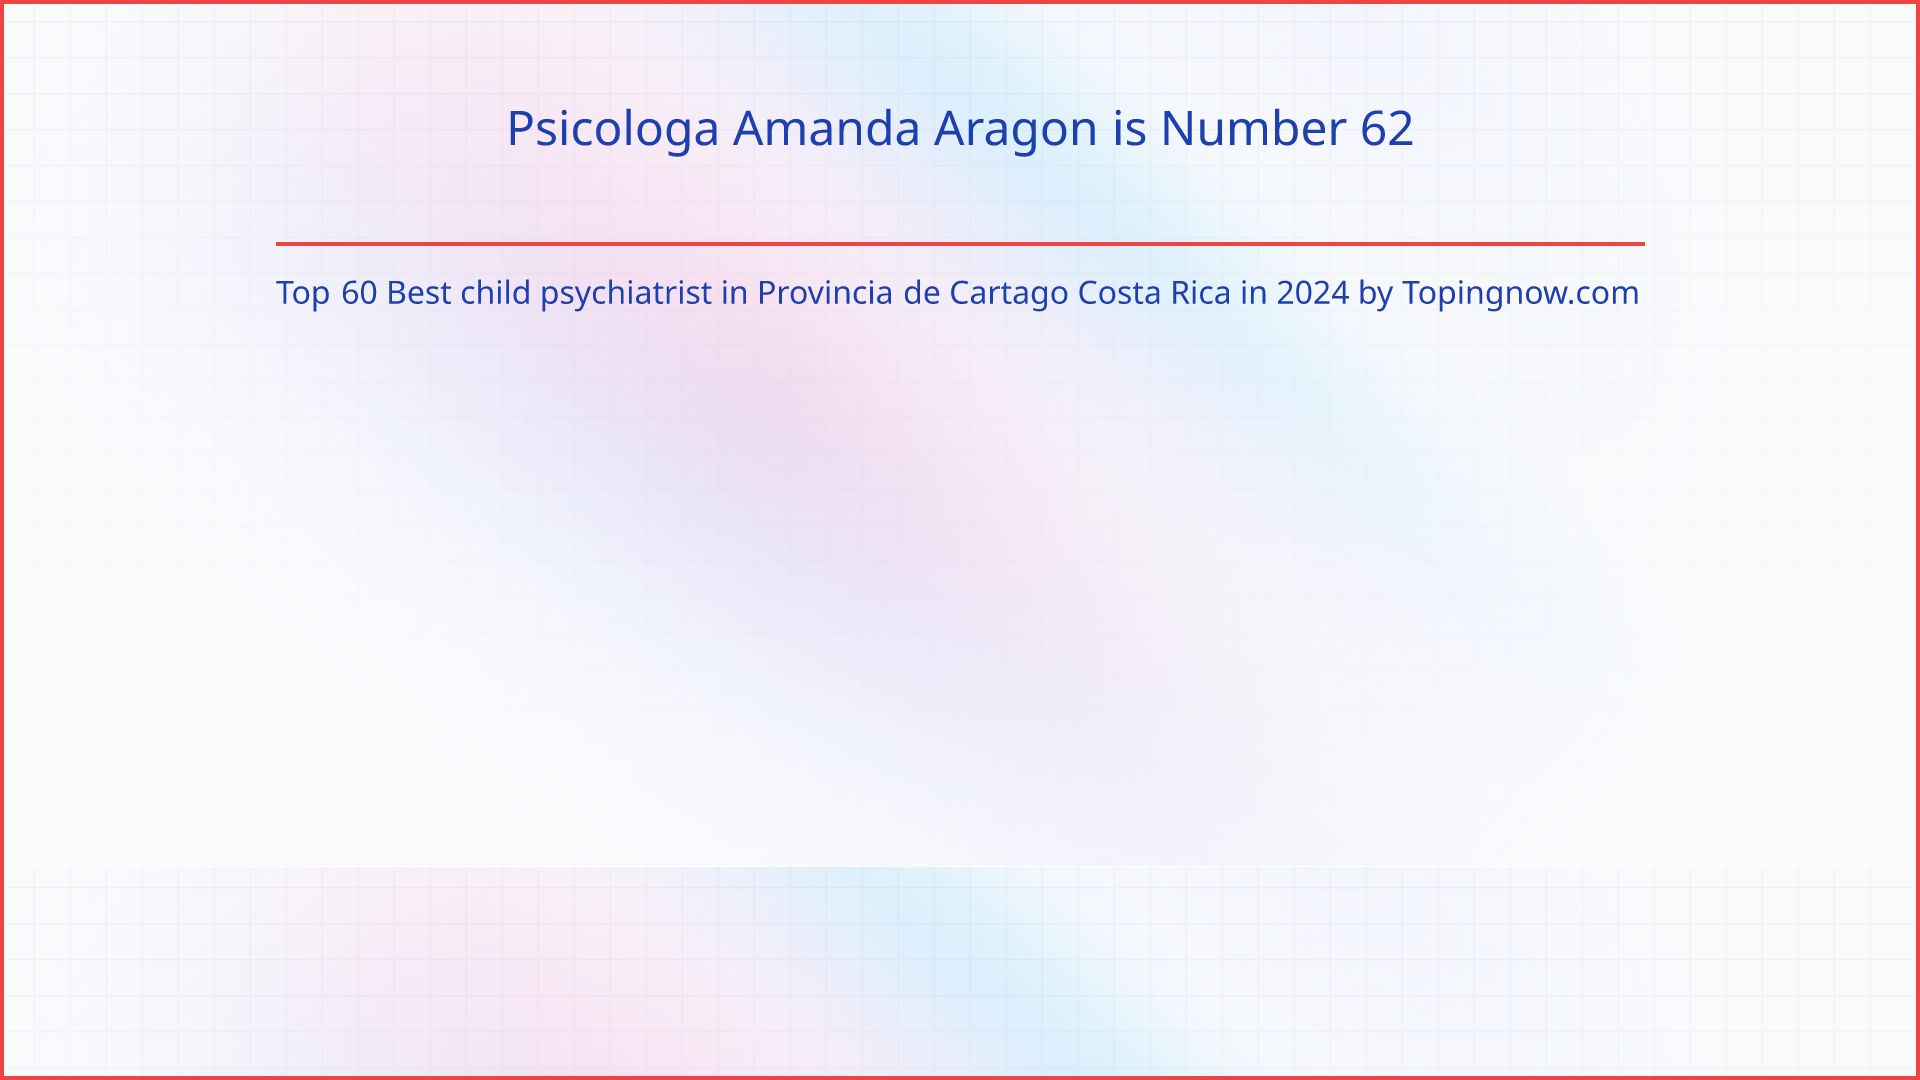 Psicologa Amanda Aragon: Top 60 Best child psychiatrist in Provincia de Cartago Costa Rica in 2024